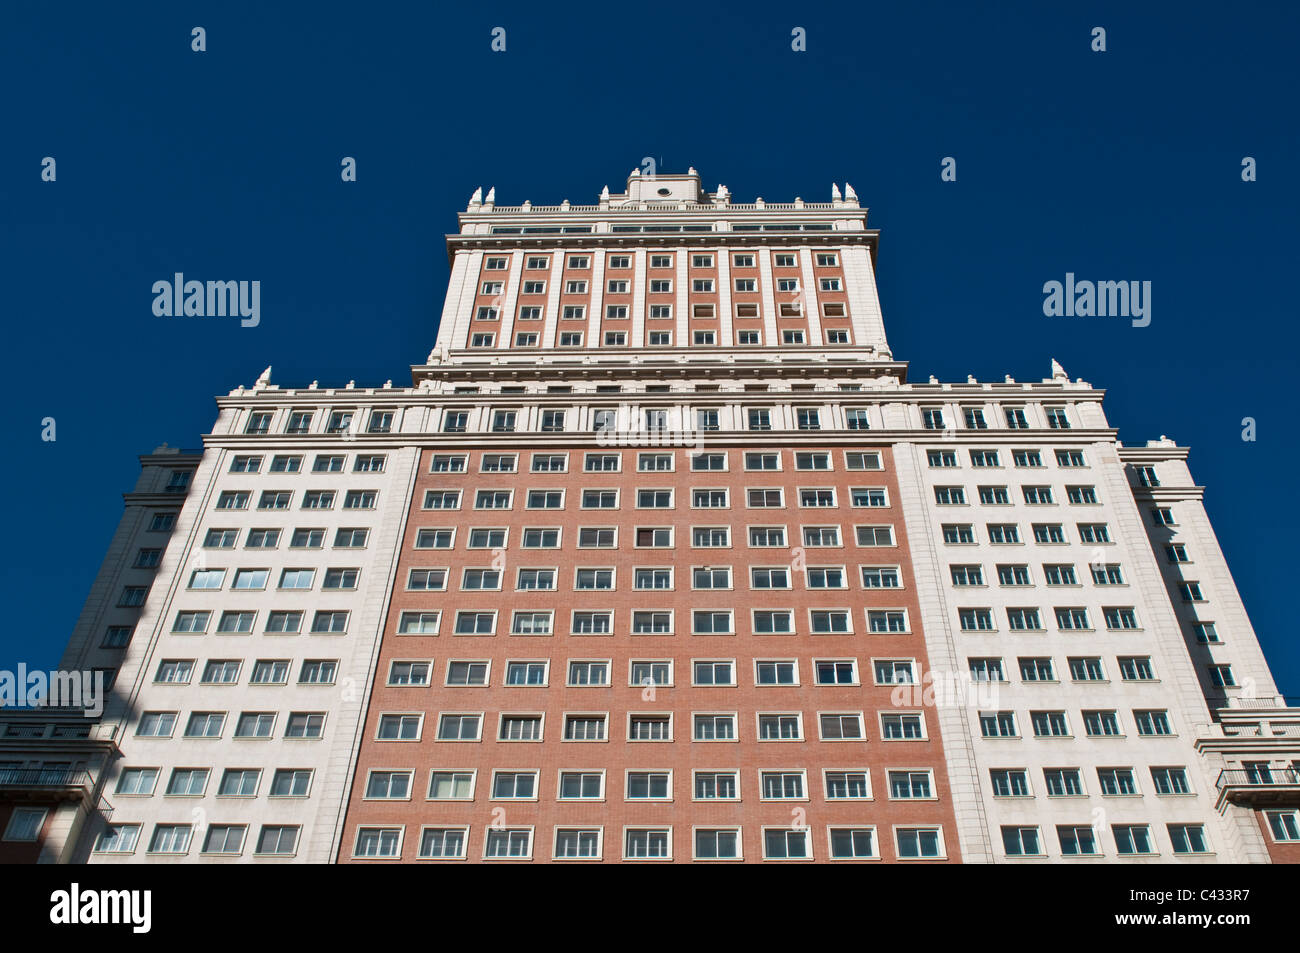 Edificio Espana, Spain Building, on Plaza de Espana, Madrid, Spain Stock Photo